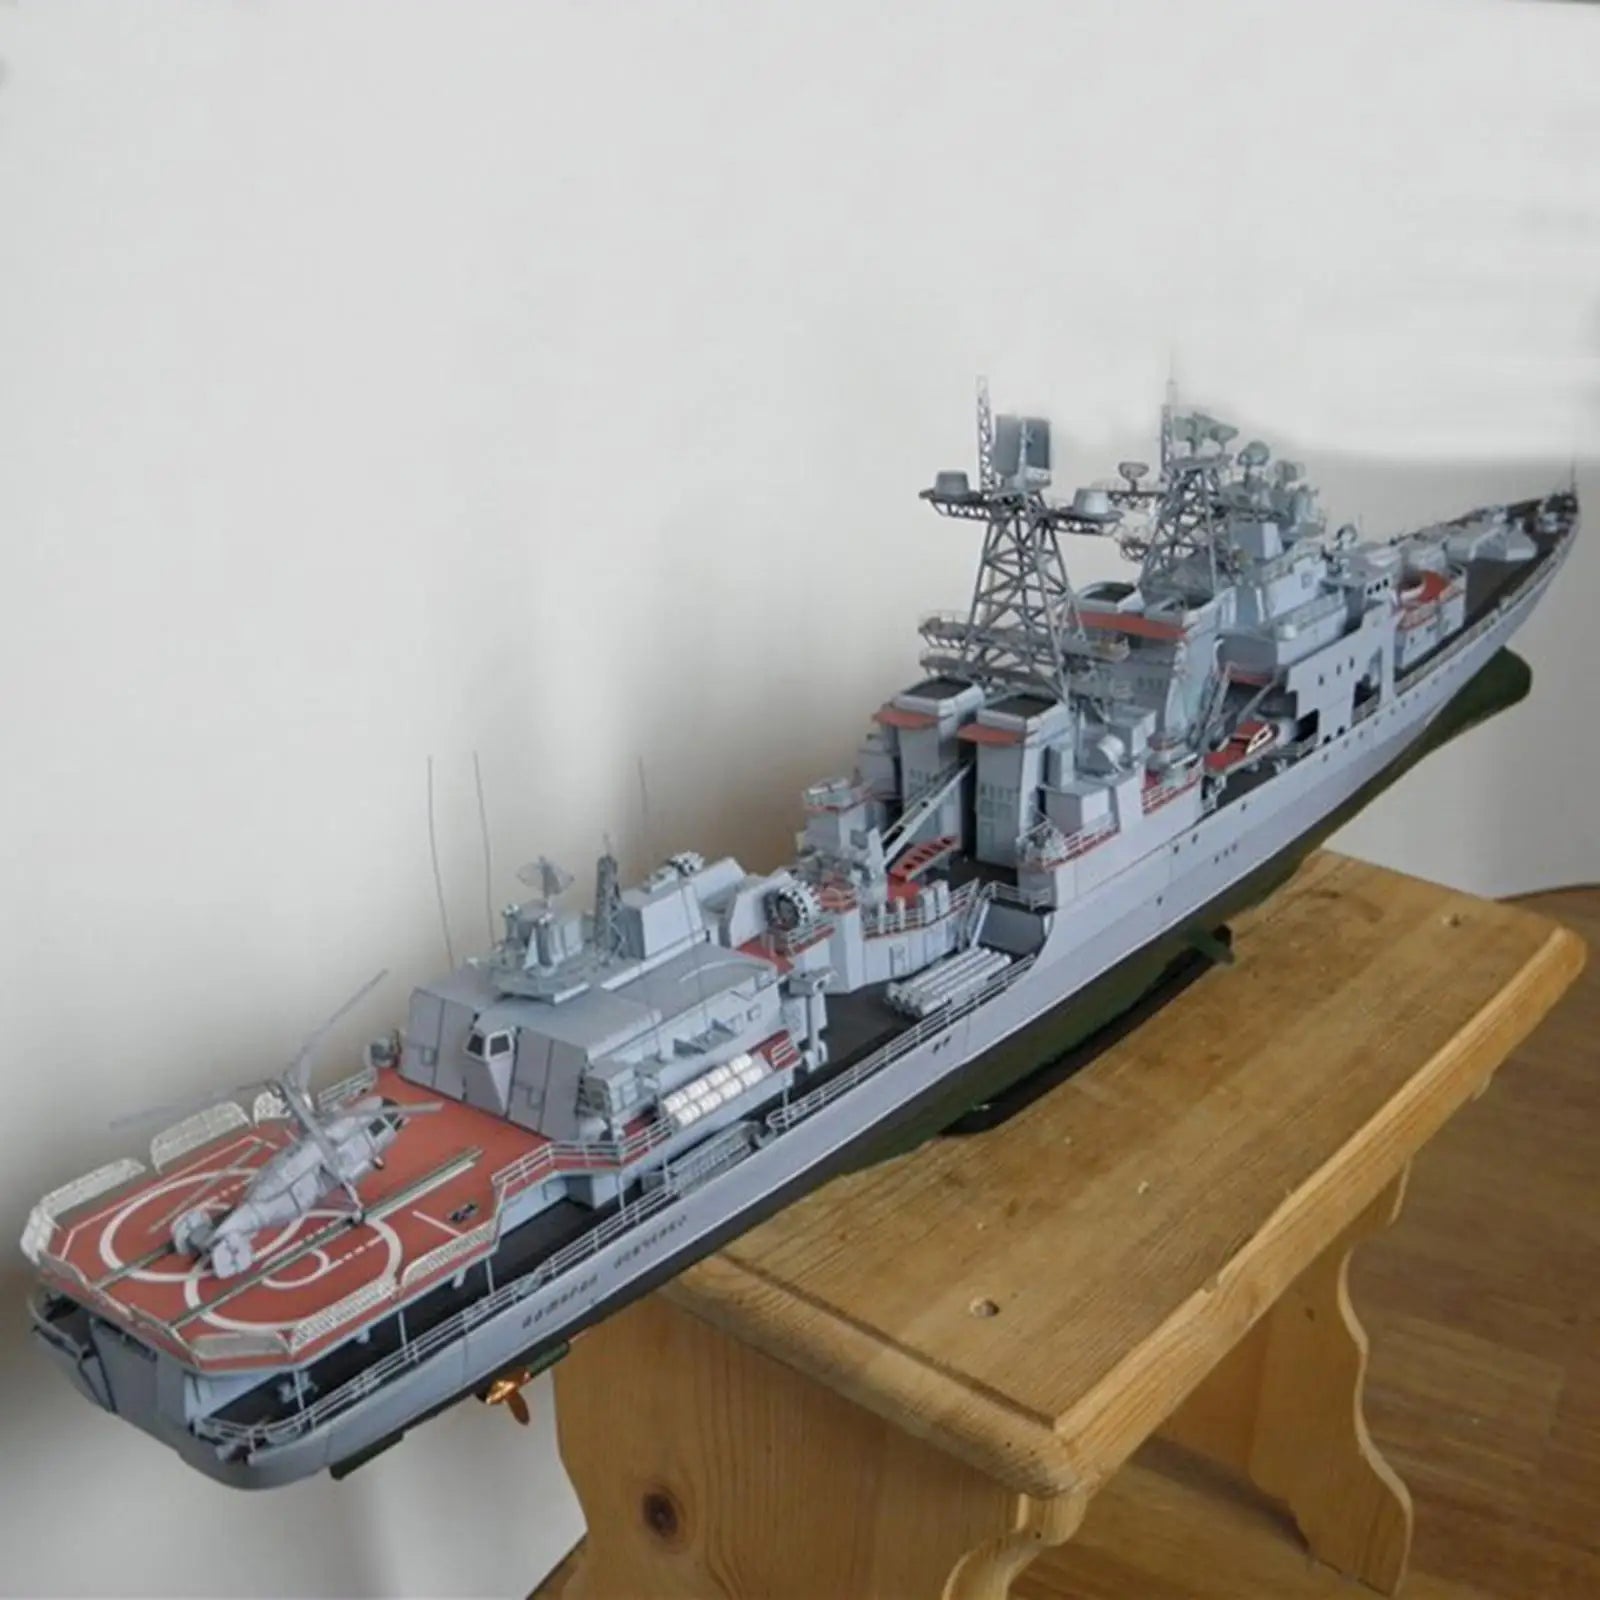 1/200 Scale Russian Levchenko Navy Ship 3D Paper Model Kit by Sunnimix